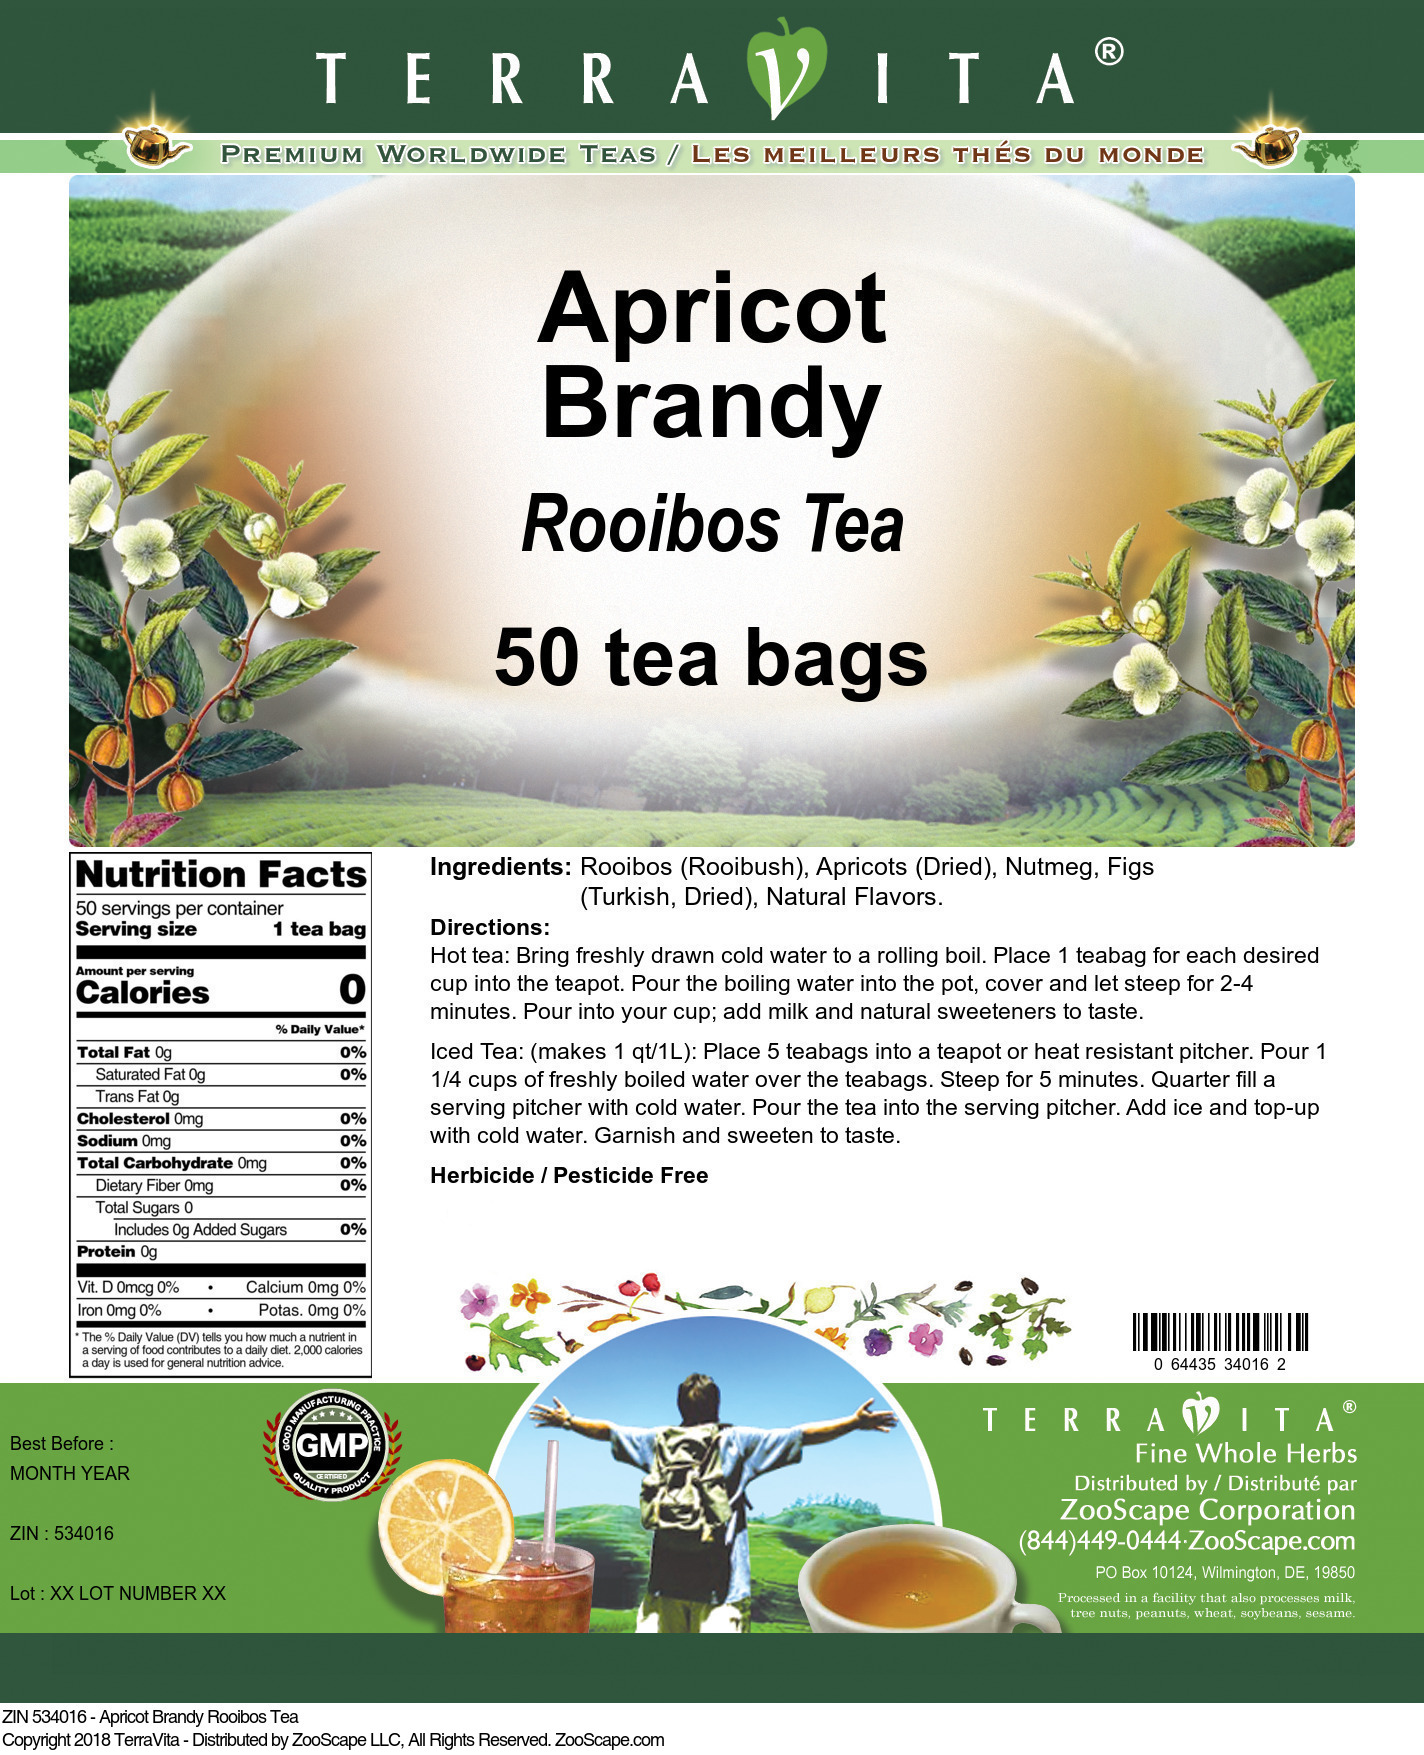 Apricot Brandy Rooibos Tea - Label